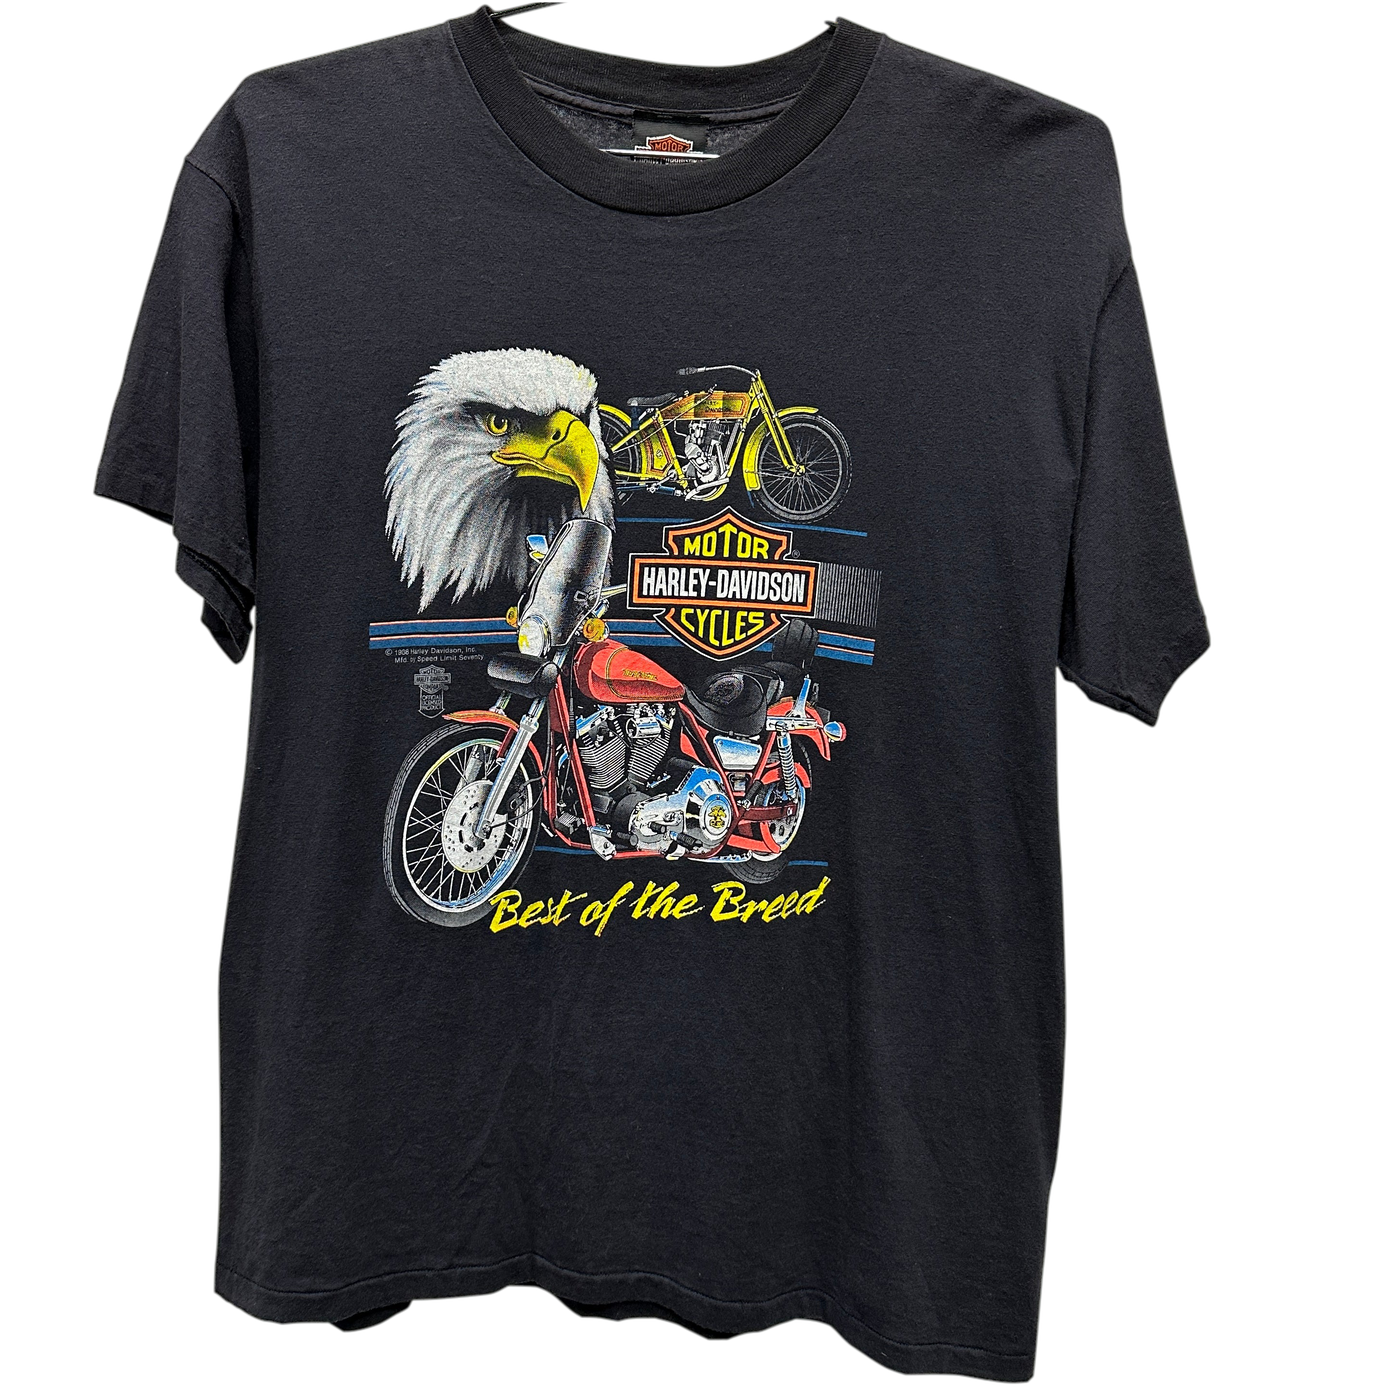 '88 Eagle "Best of the Breed" Black Harley Davidson T-Shirt sz XL